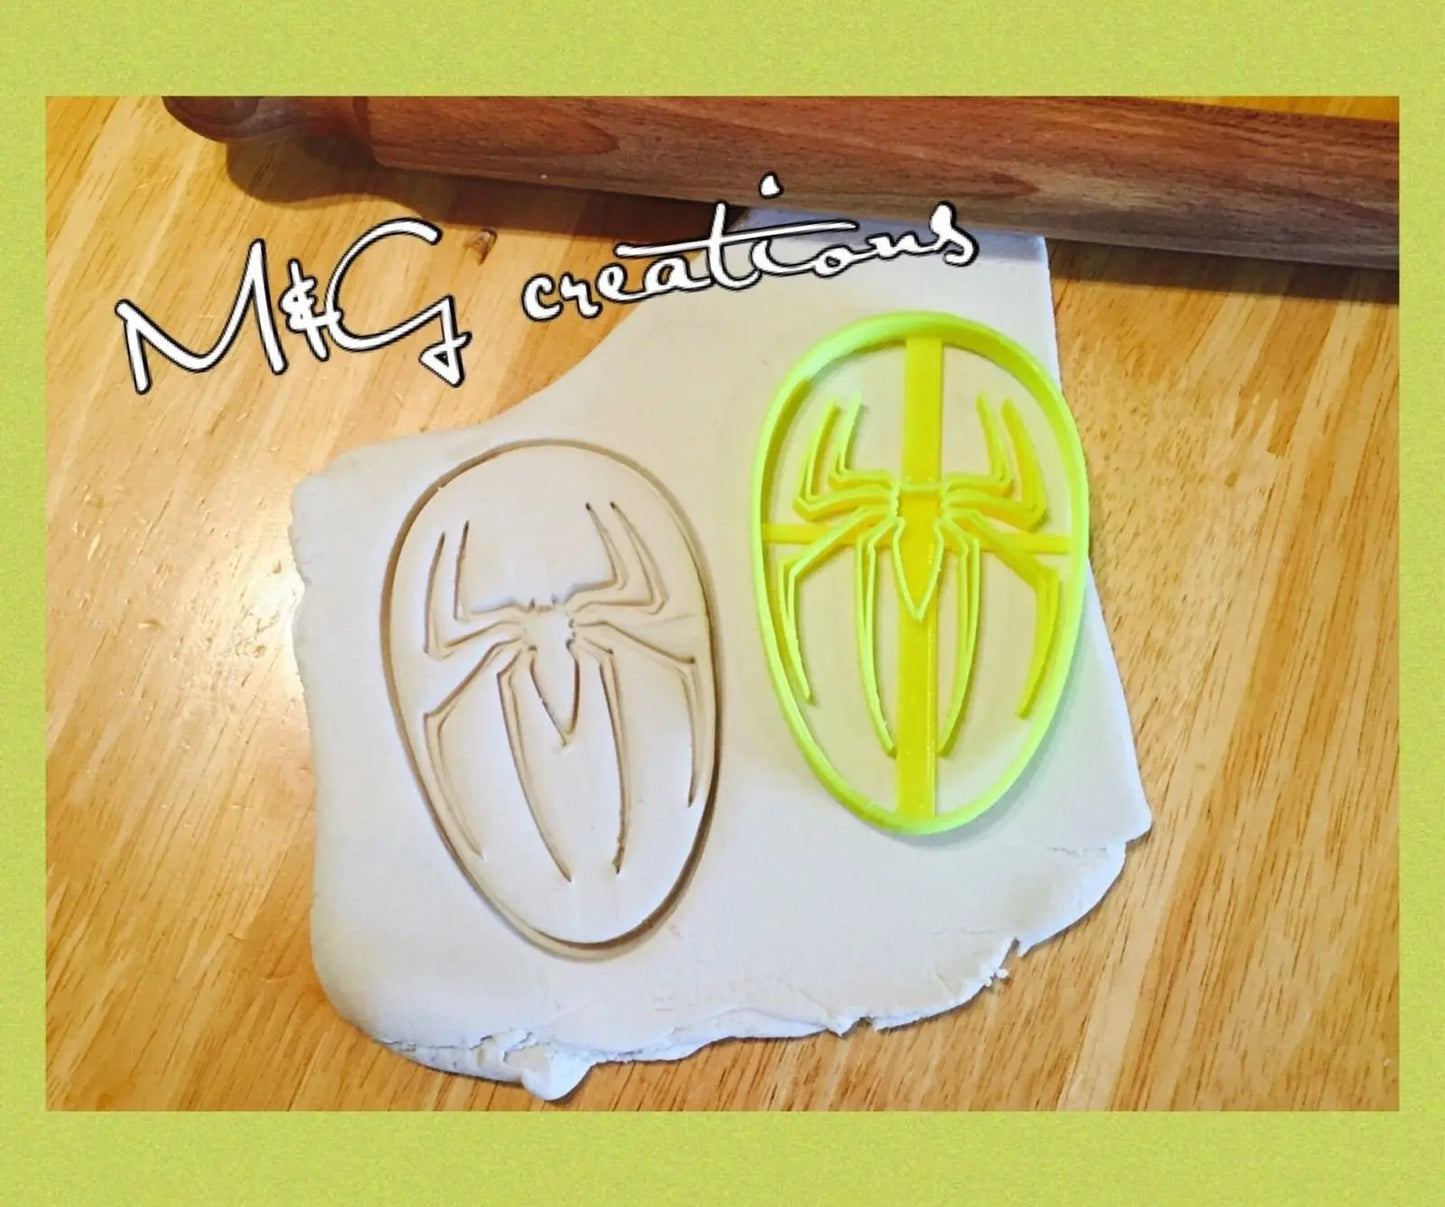 Spiderman Logo/face Uk Seller Cookie Cutter fondant cake decorating MEG cookie cutters